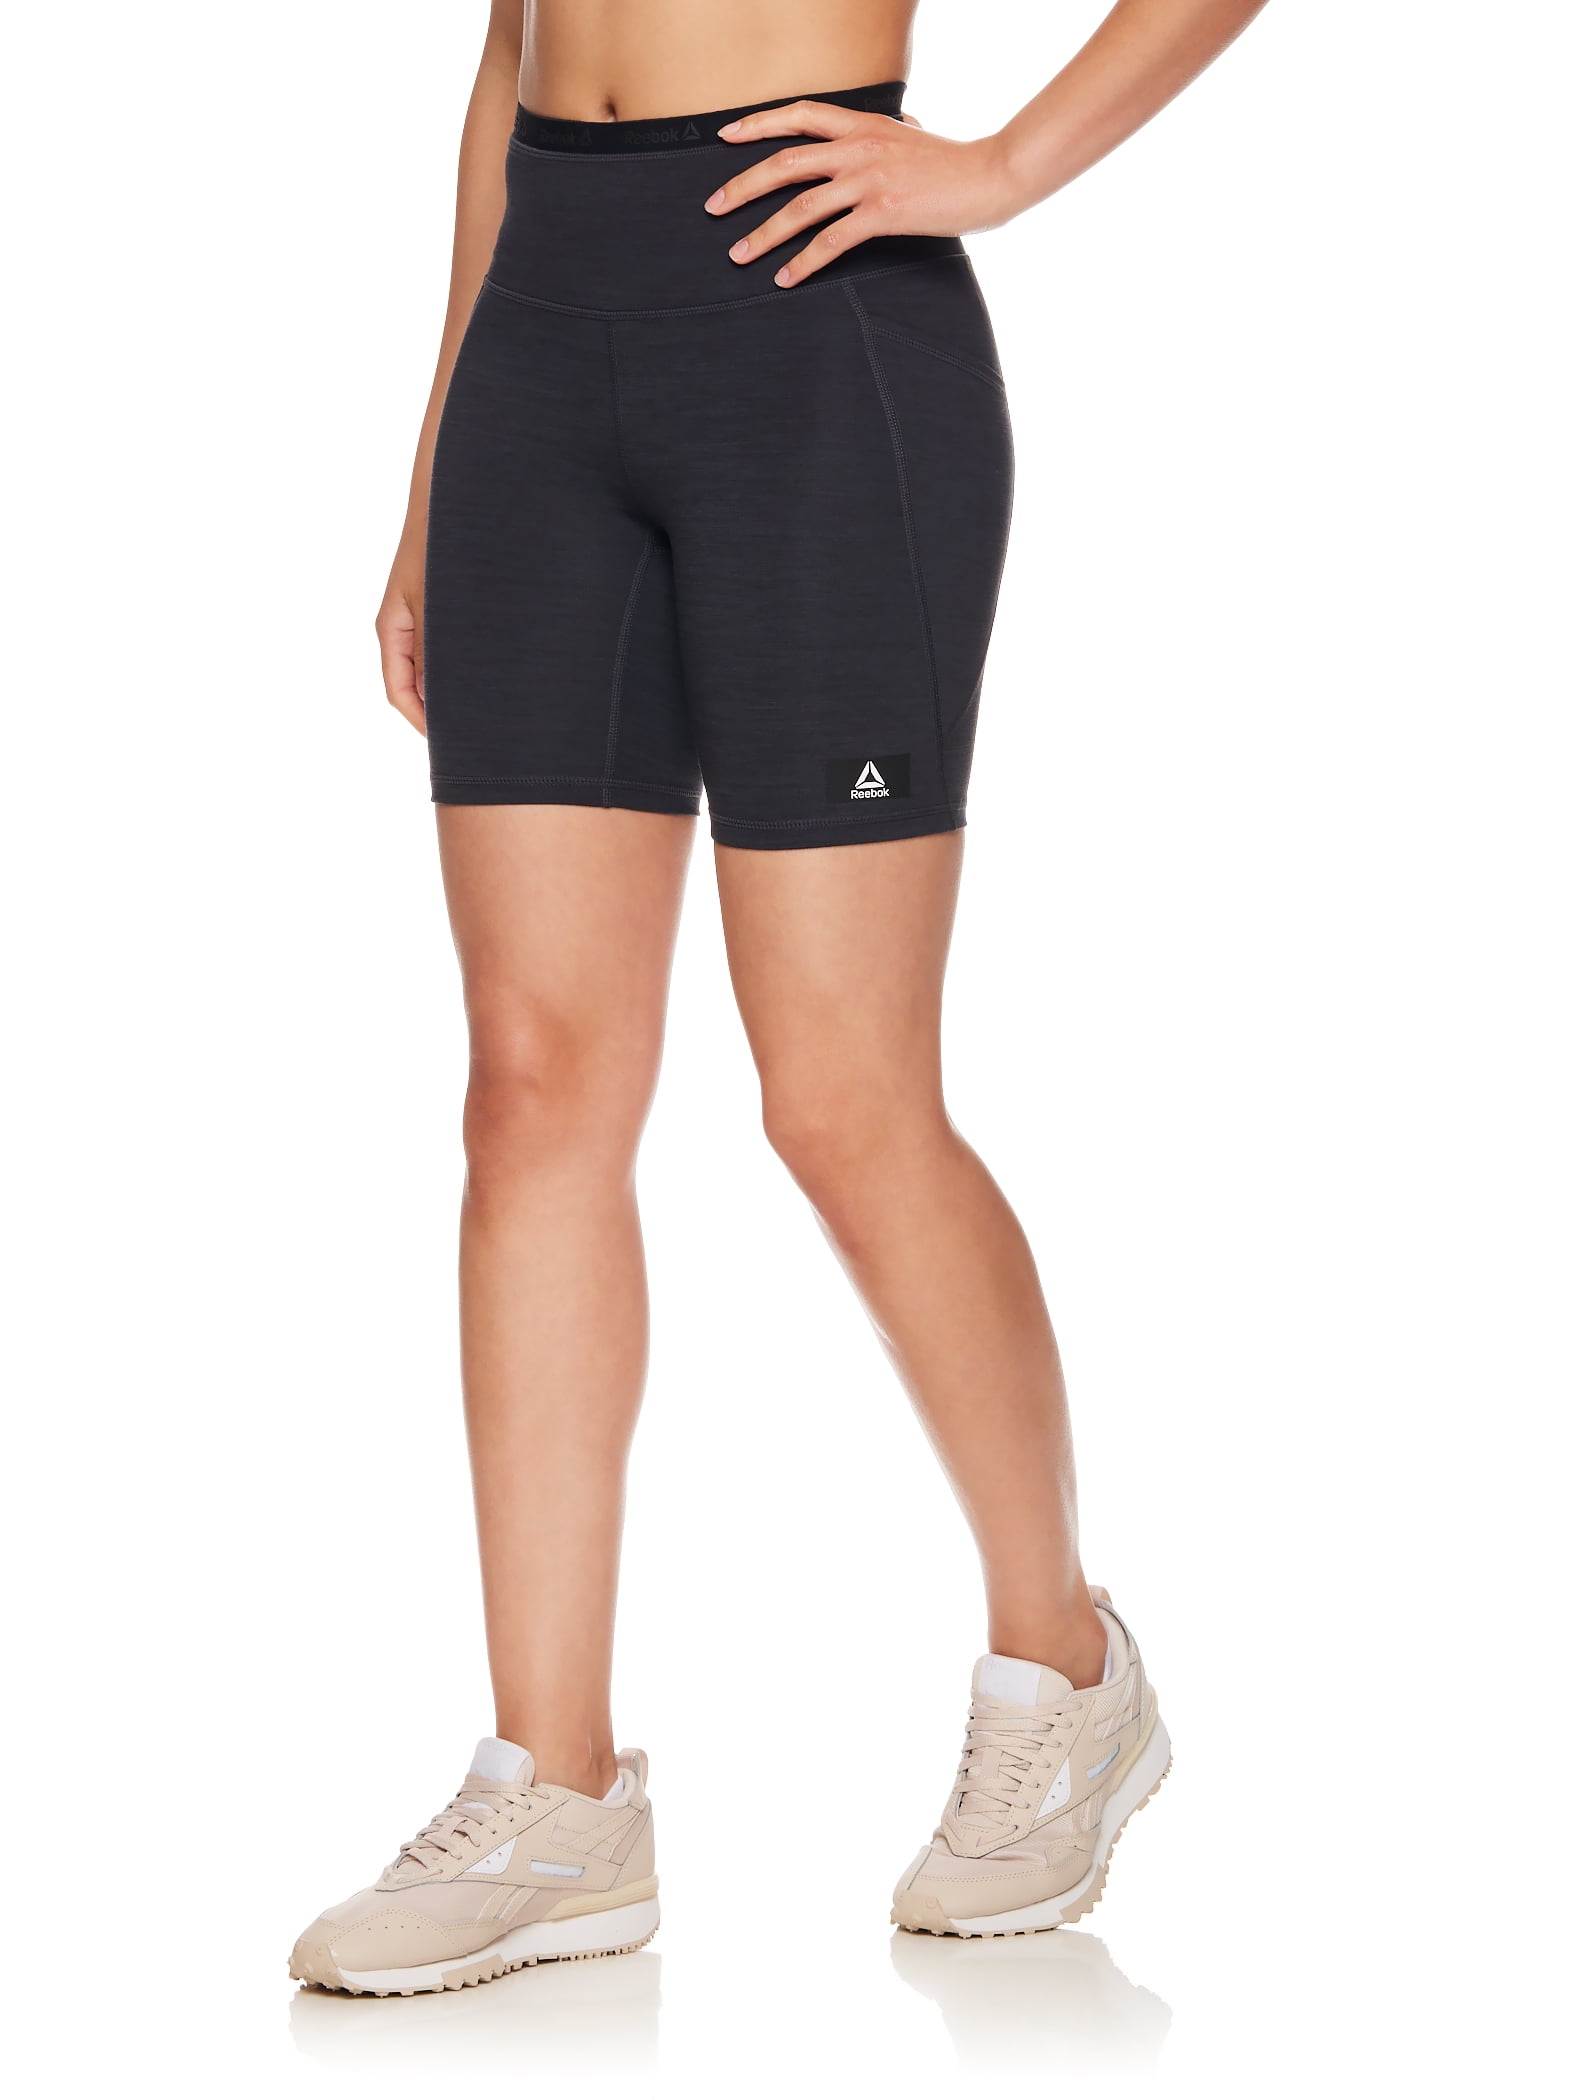 Reebok Women's Lux High-Rise Pull-On Bike Shorts, A Macy's Exclusive -  Macy's